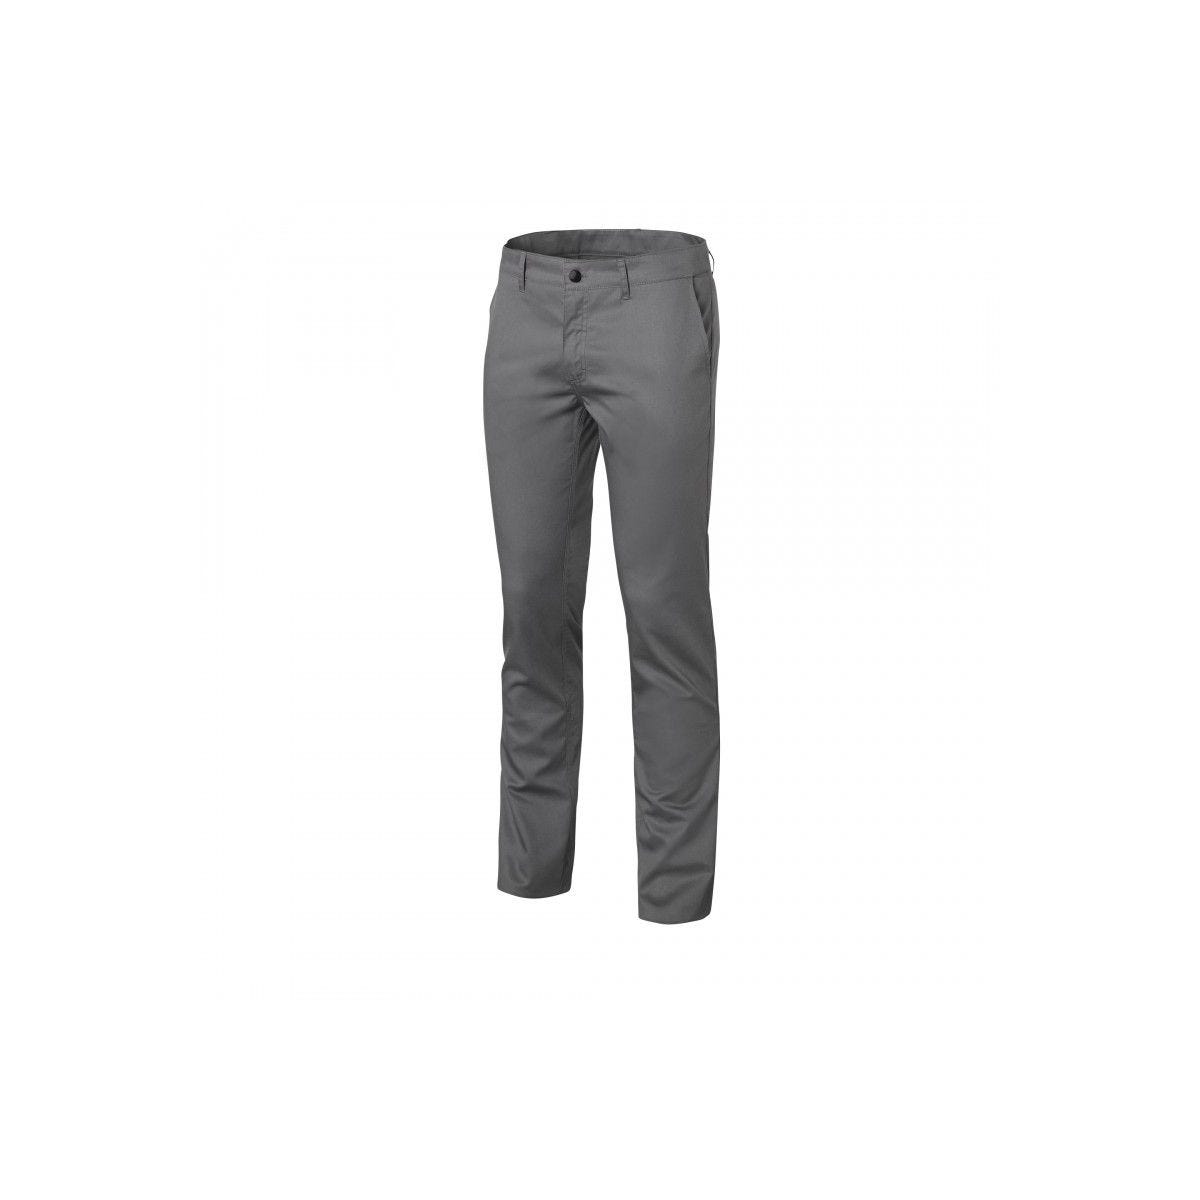 Pantalon homme coupe chino SLACK gris - Molinel - Taille 40